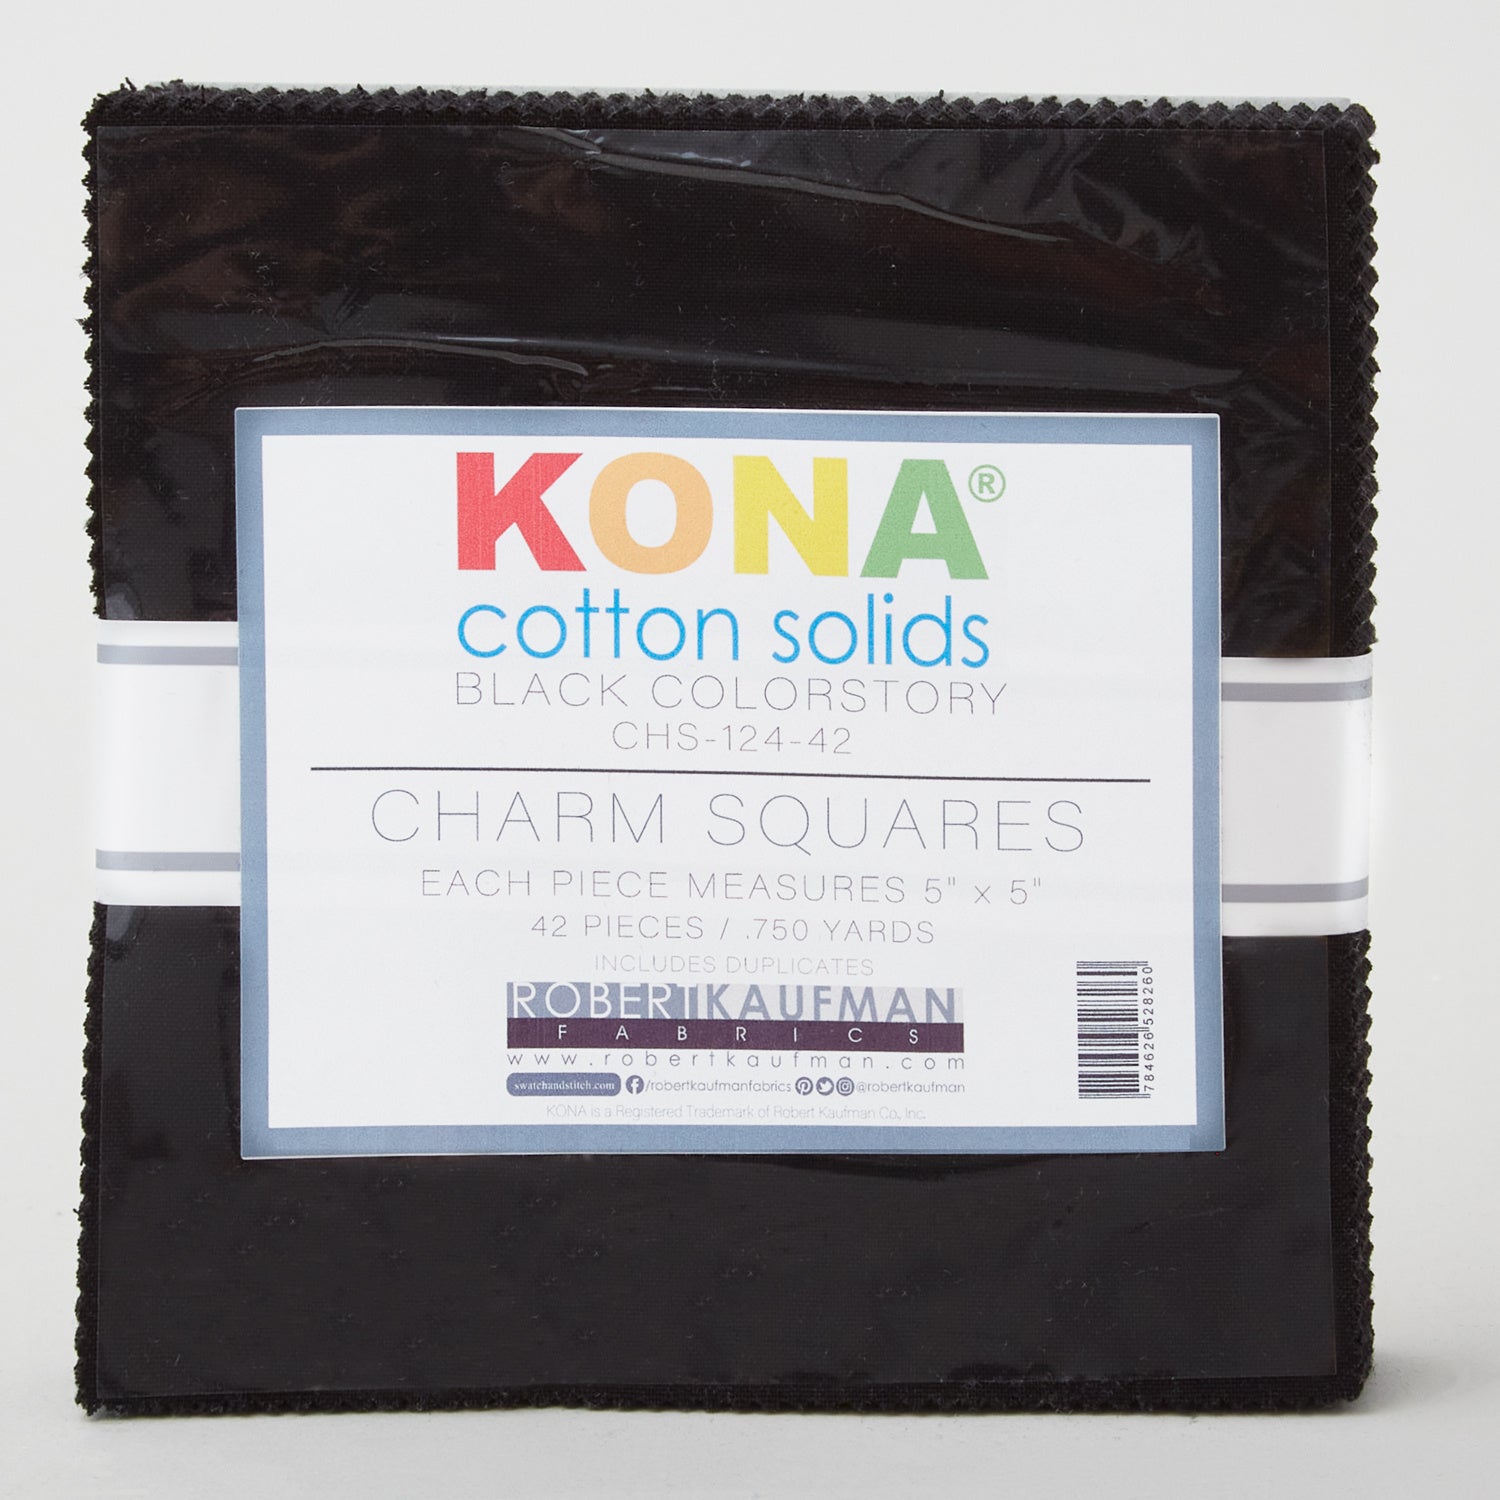 Robert Kaufman Fabrics Kona Cotton Lovely Palette Charm Squares 5